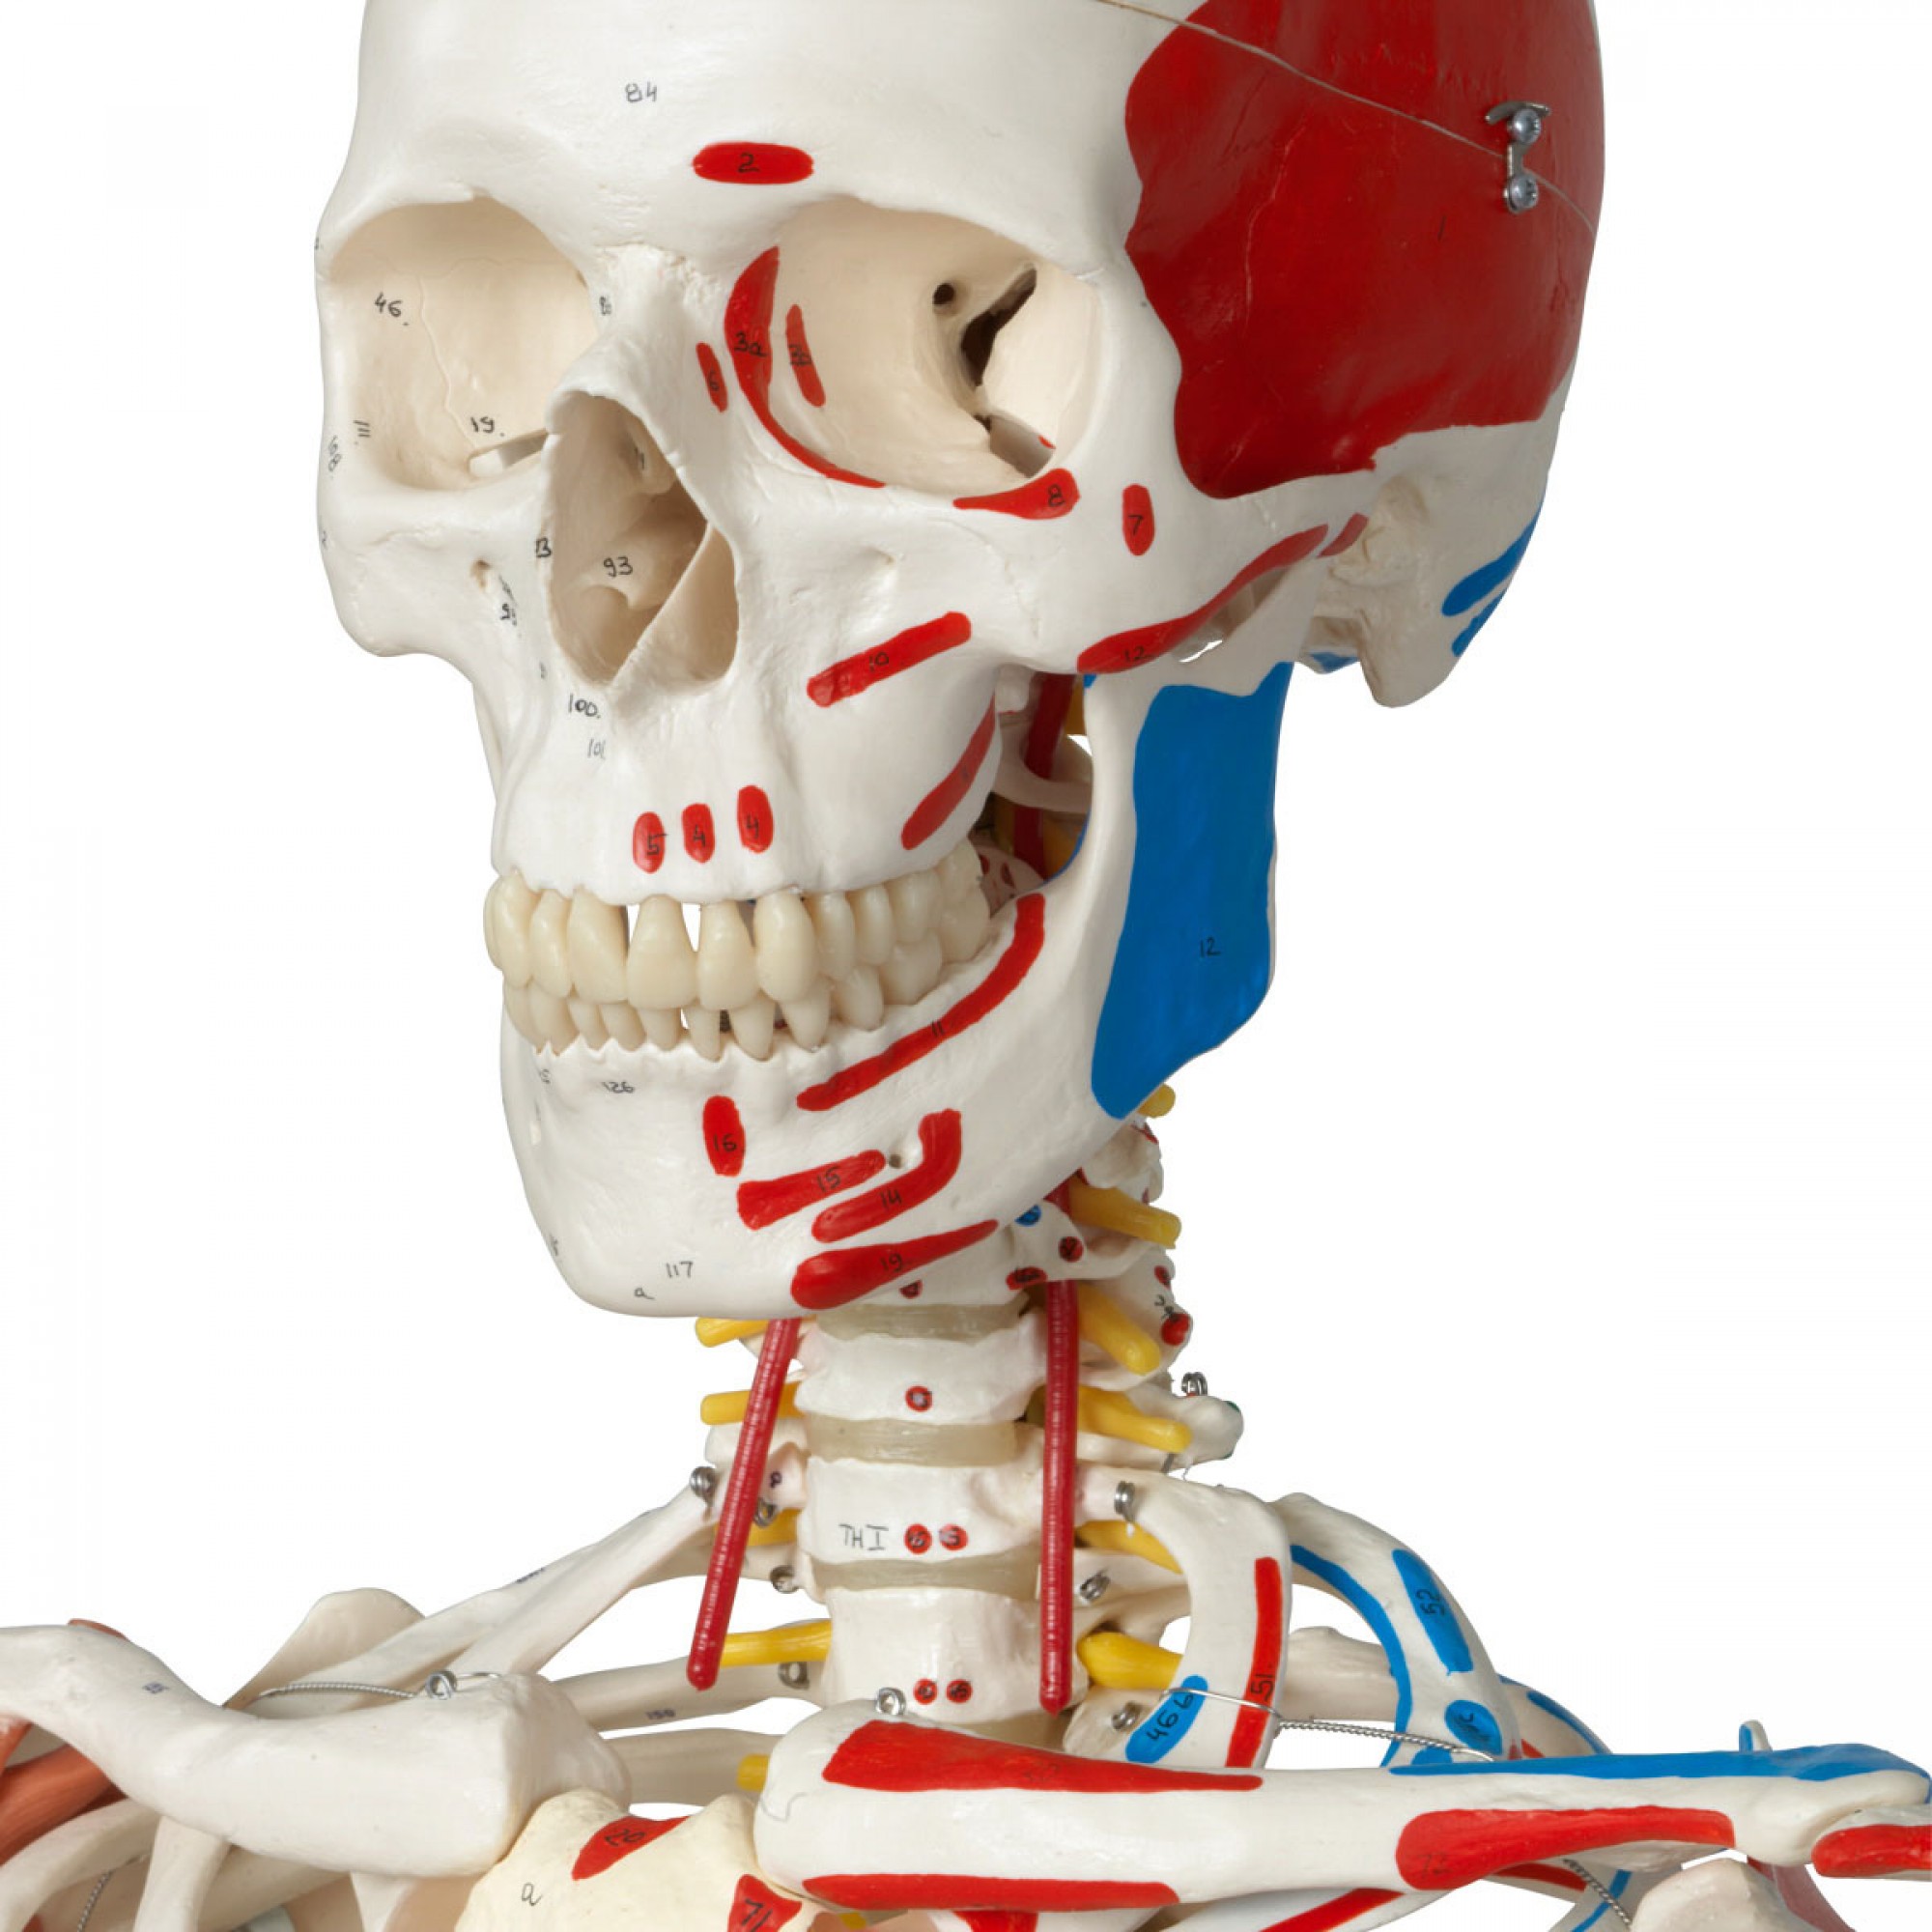 Belajar Anatomi Dengan Alat Kerangka Manusia Medicalogy